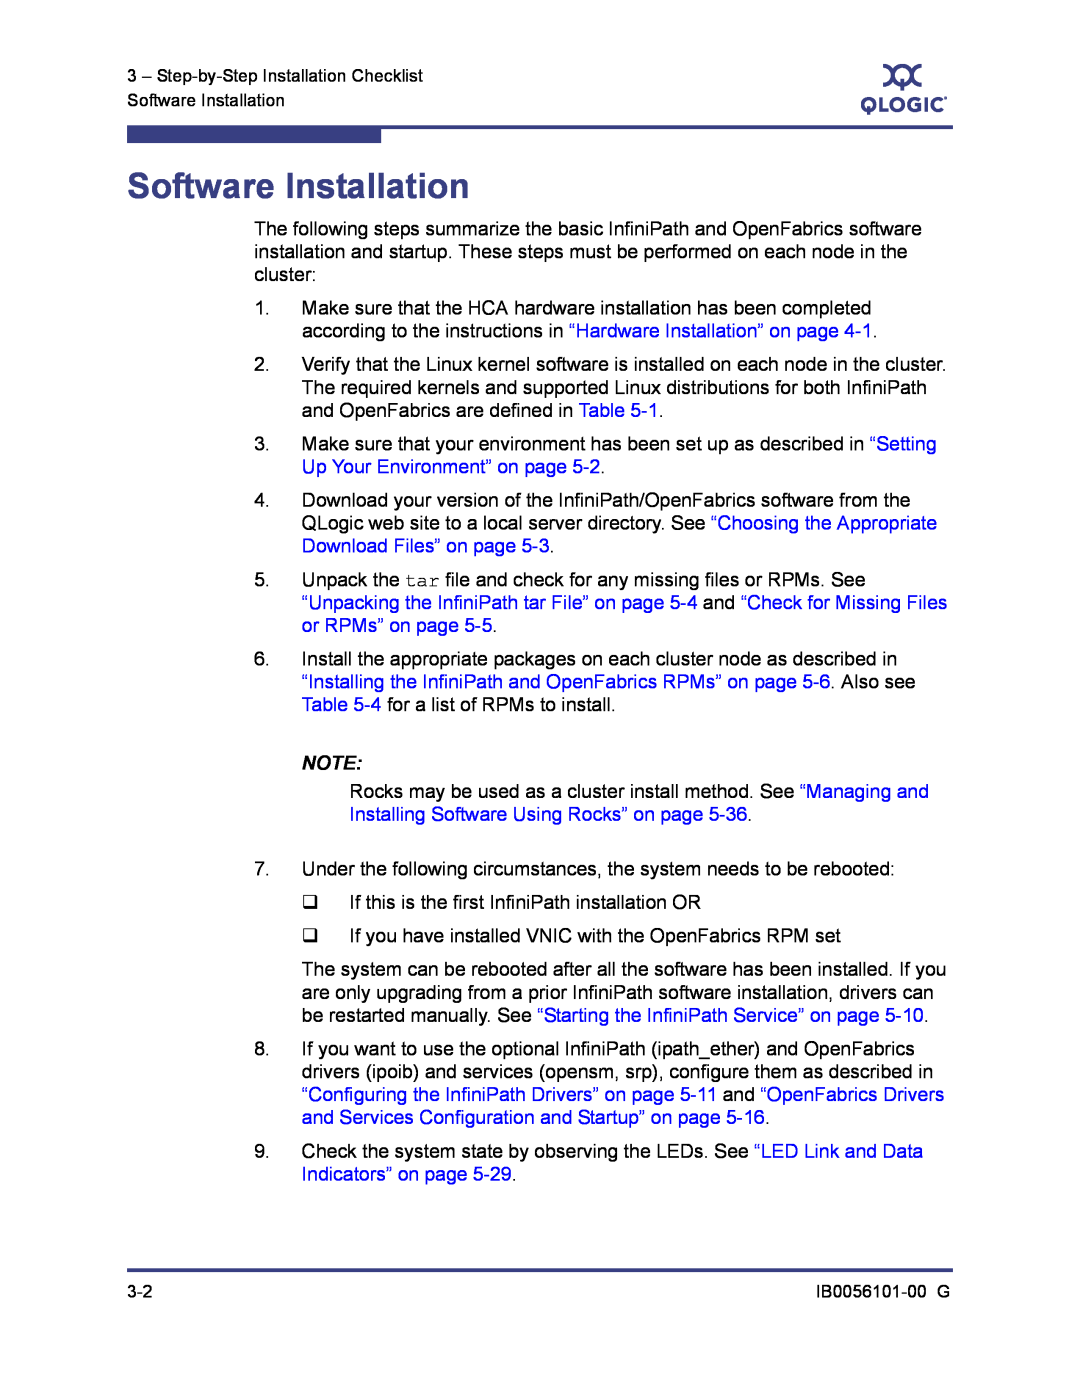 Q-Logic IB0056101-00 G manual Software Installation, Installing Software Using Rocks” on page 